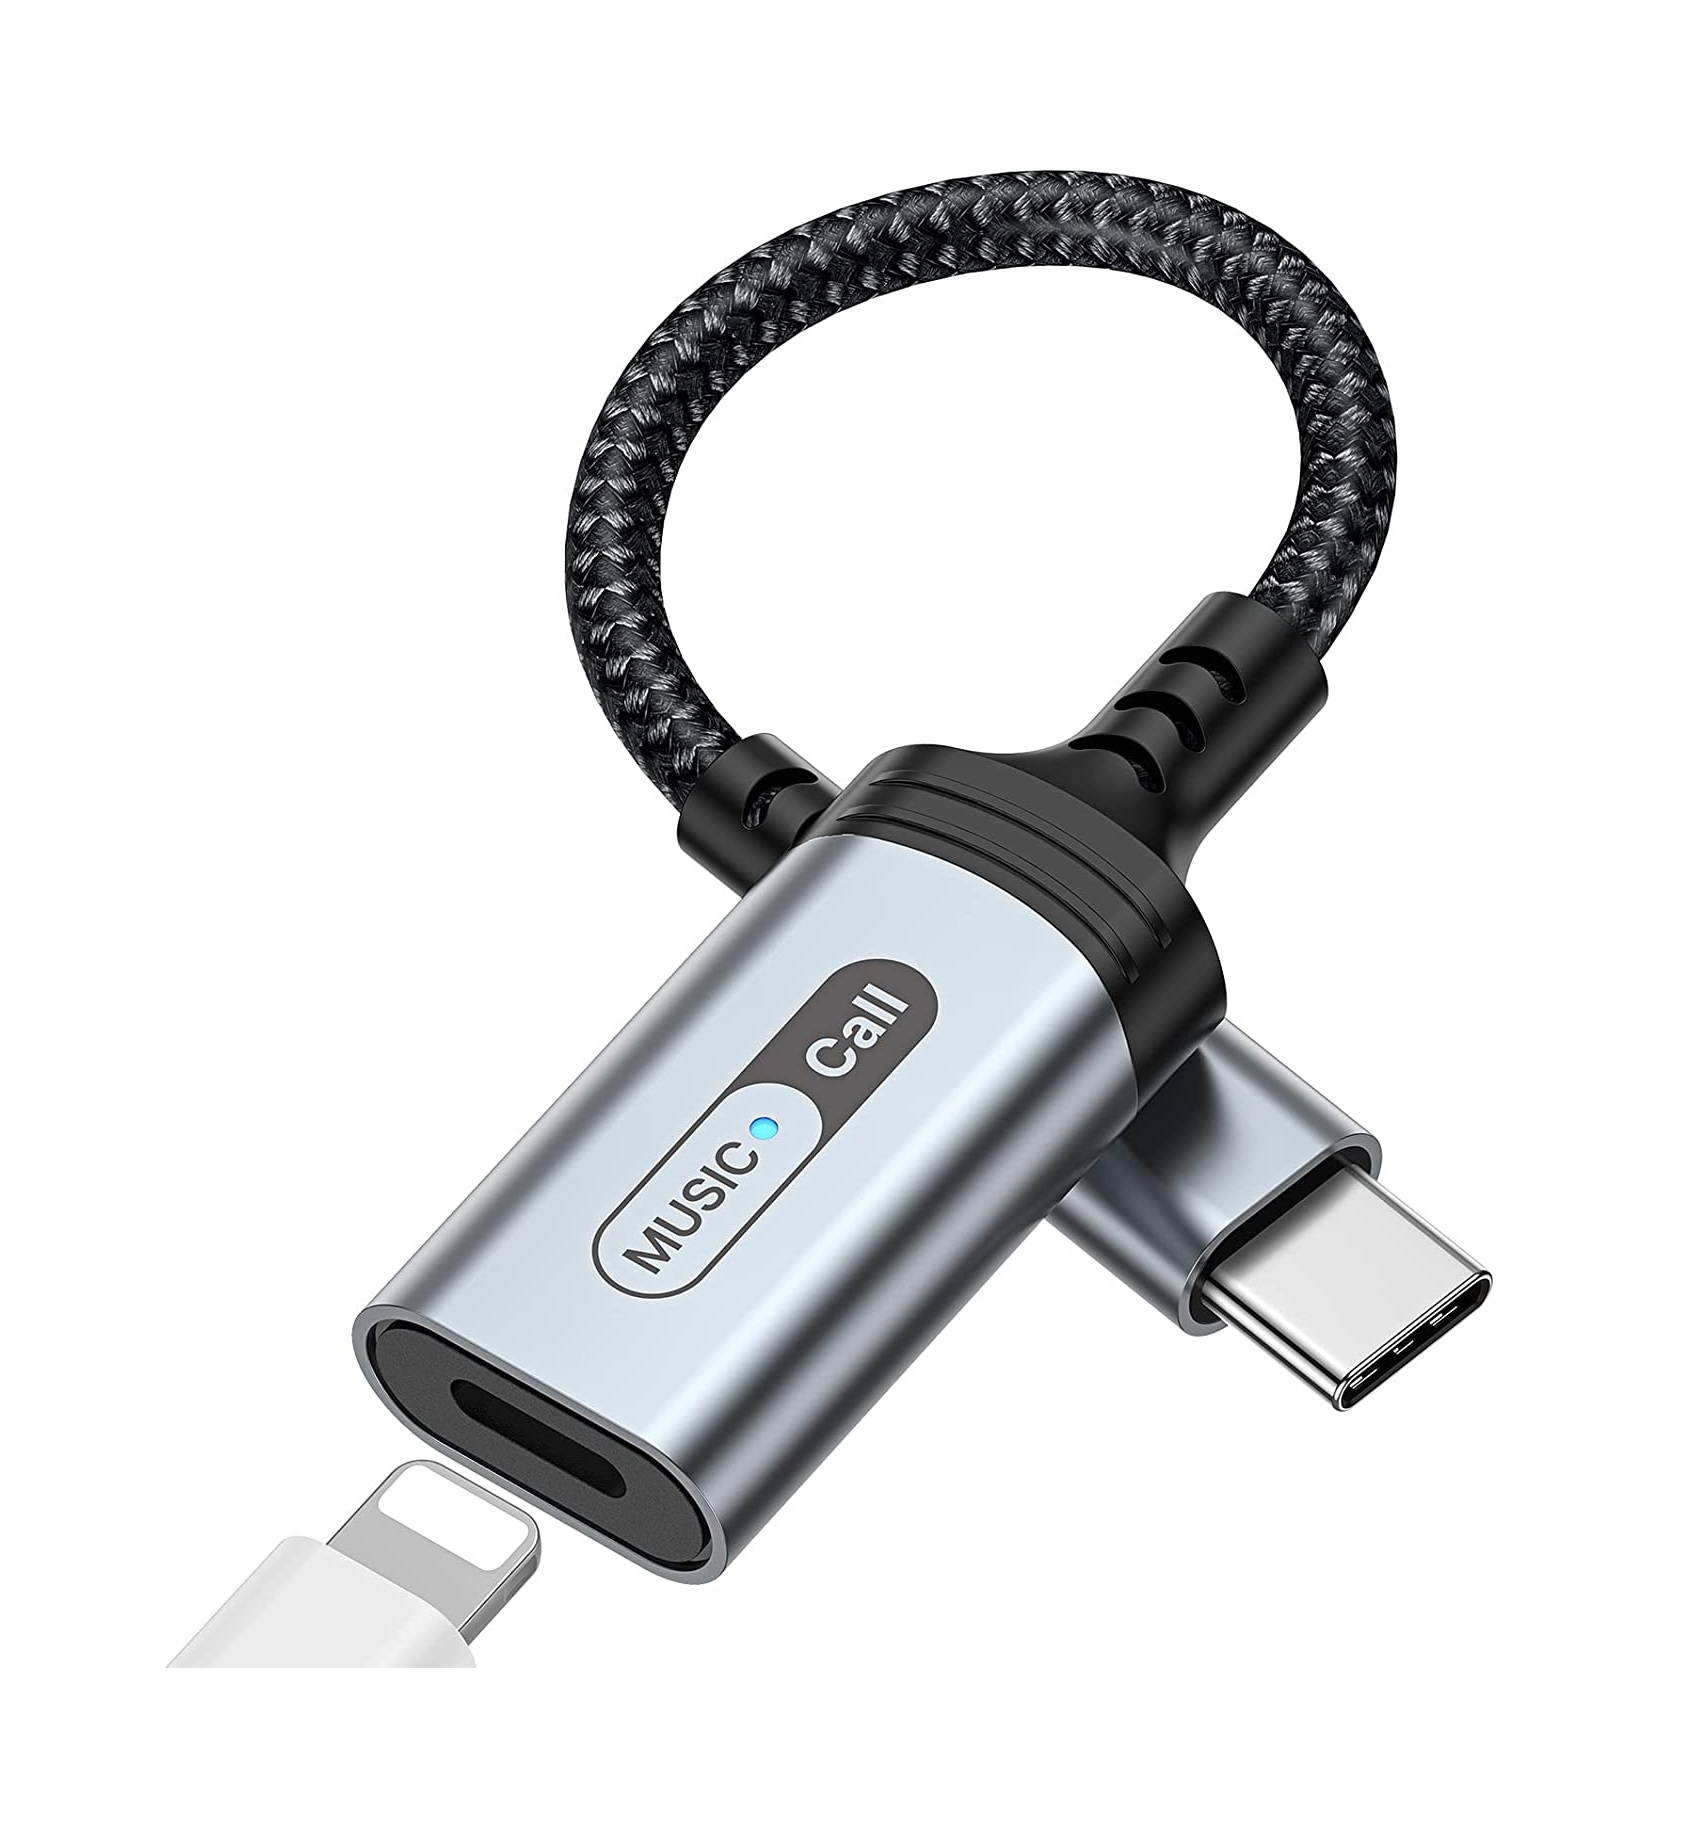 Comprar Adaptador de usb tipo c a lightning para iPhone iPad conversor de  puerto para móvil de USB-C a Lightning carga y transferencia de datos